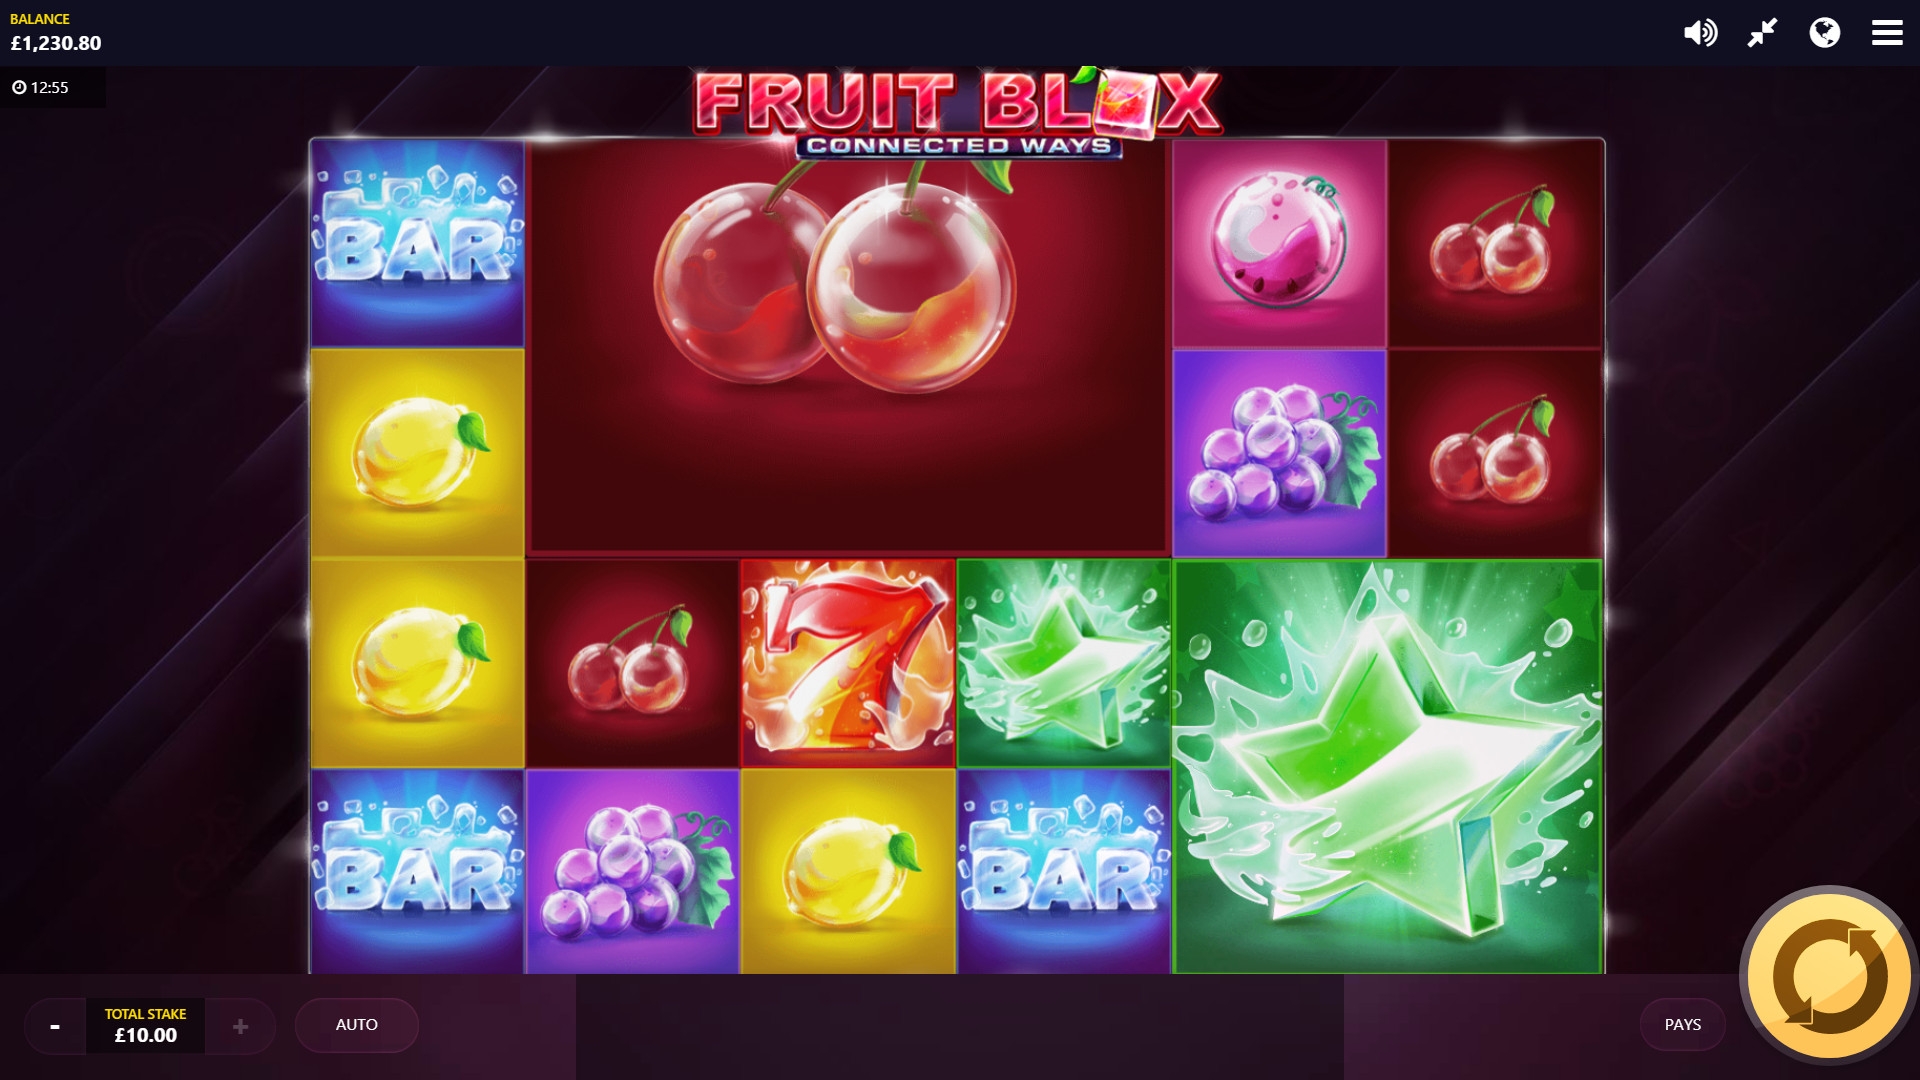 Fruit Blox (Fruit Blox) from category Slots